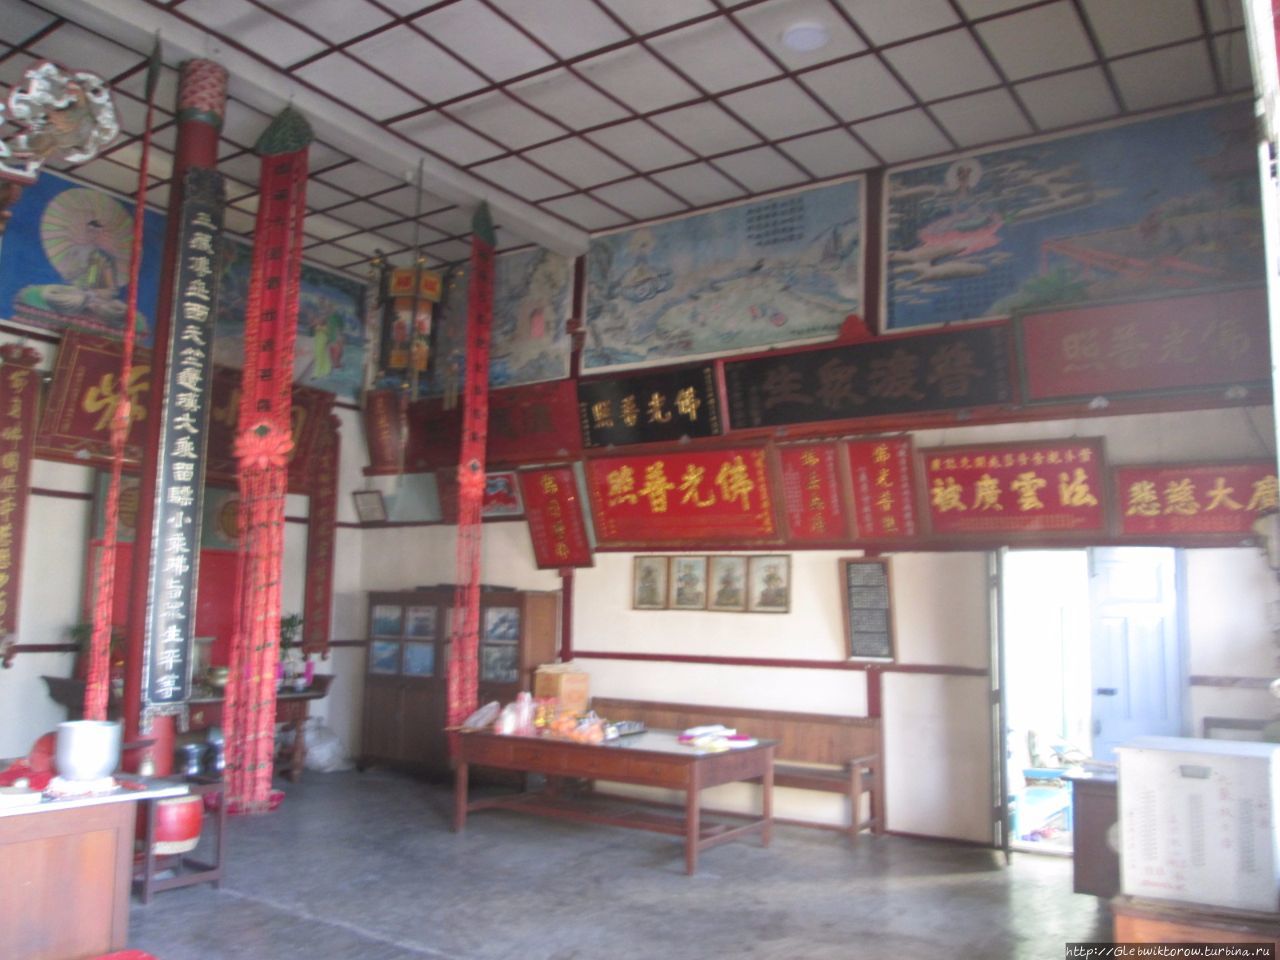 Китайский храм Сипо, Мьянма